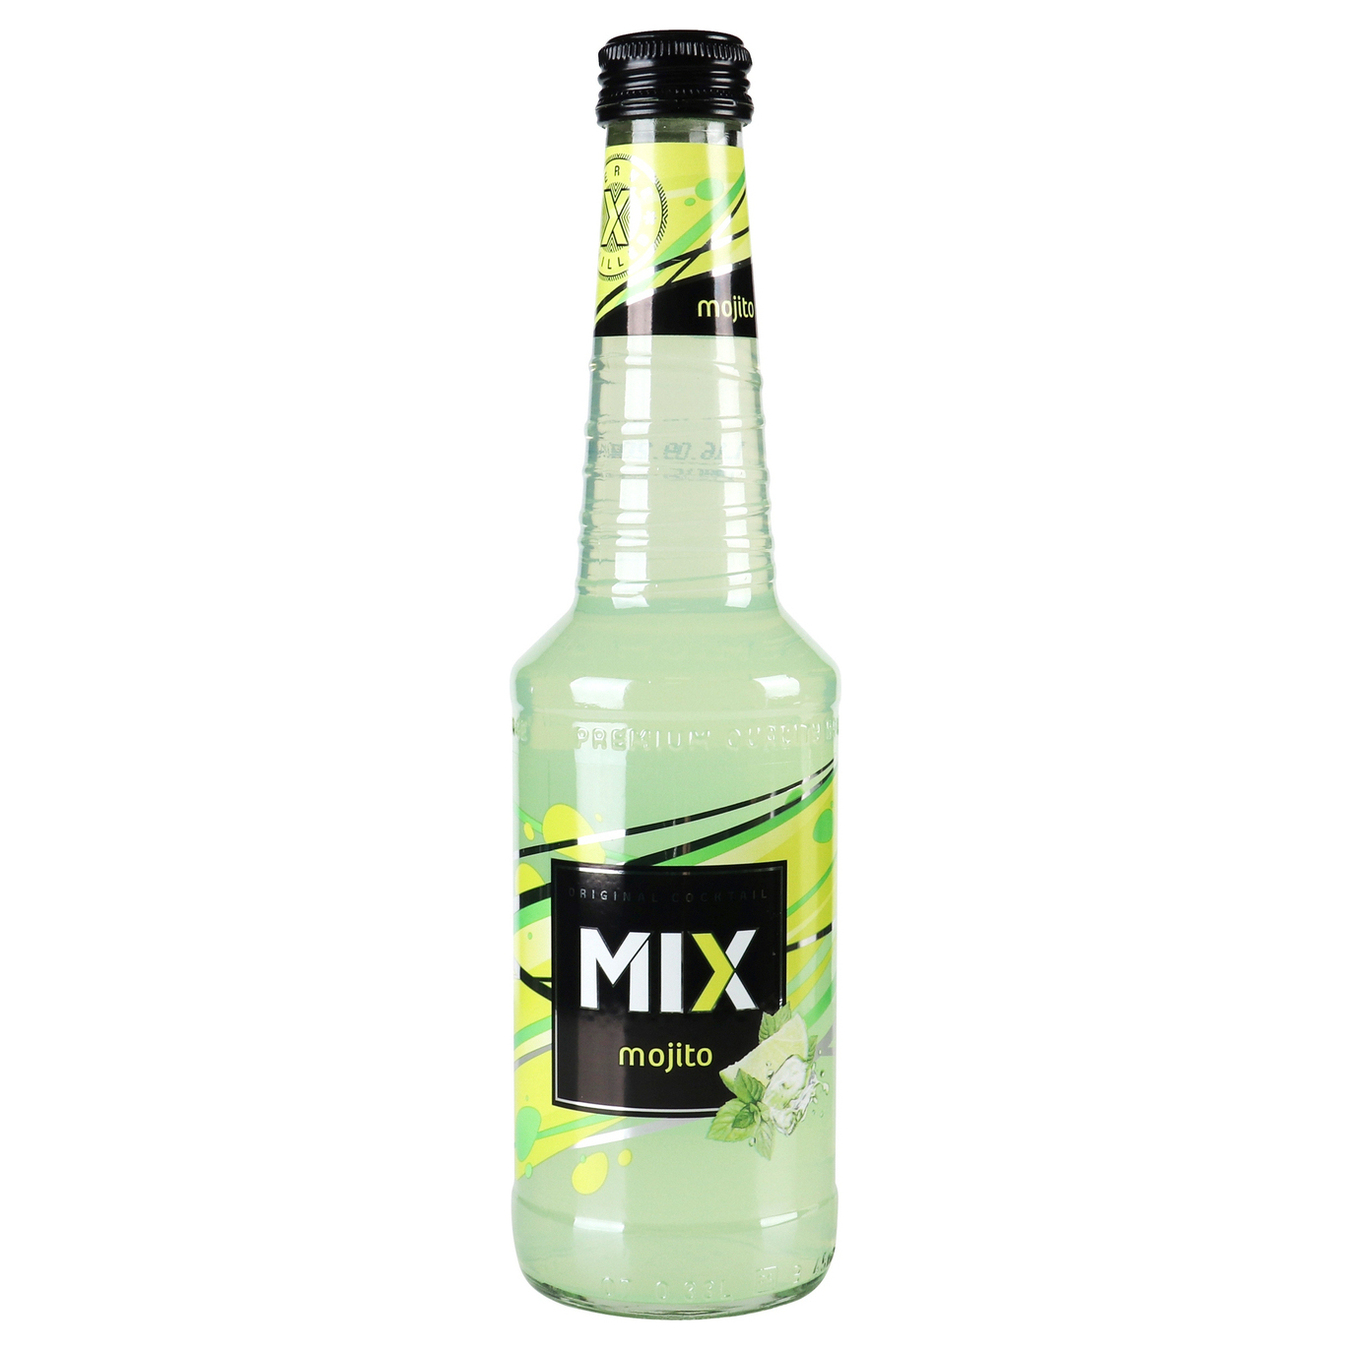 Drink MIX mojito 4% 0.33l s/pl